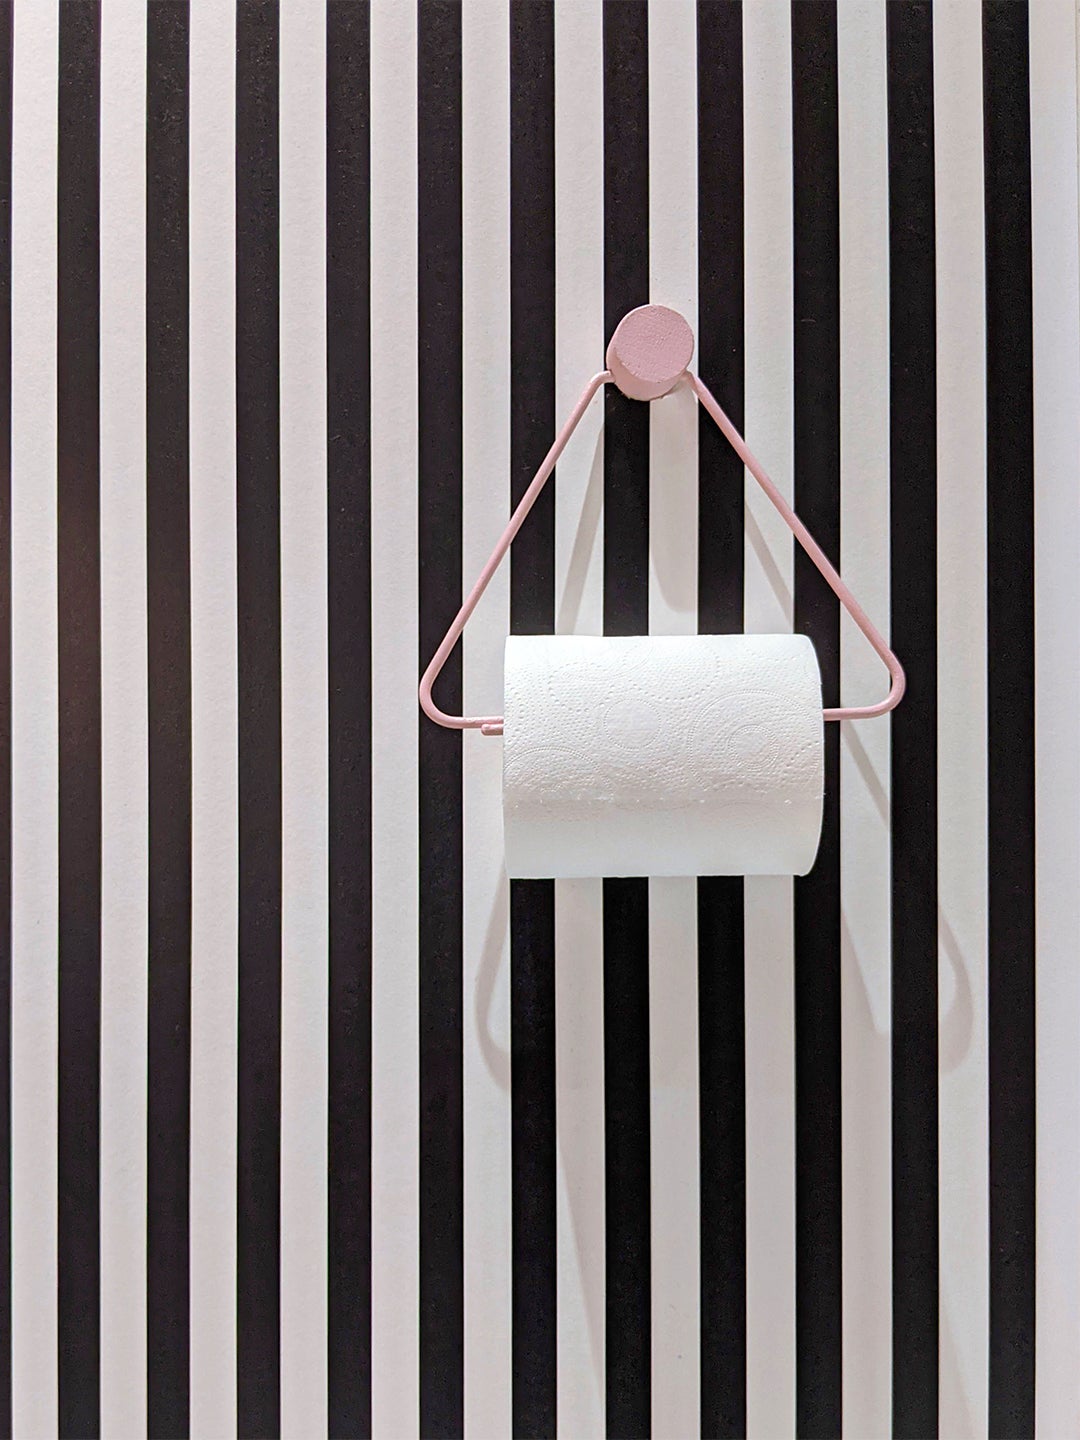 striped wall around toilet paper holder